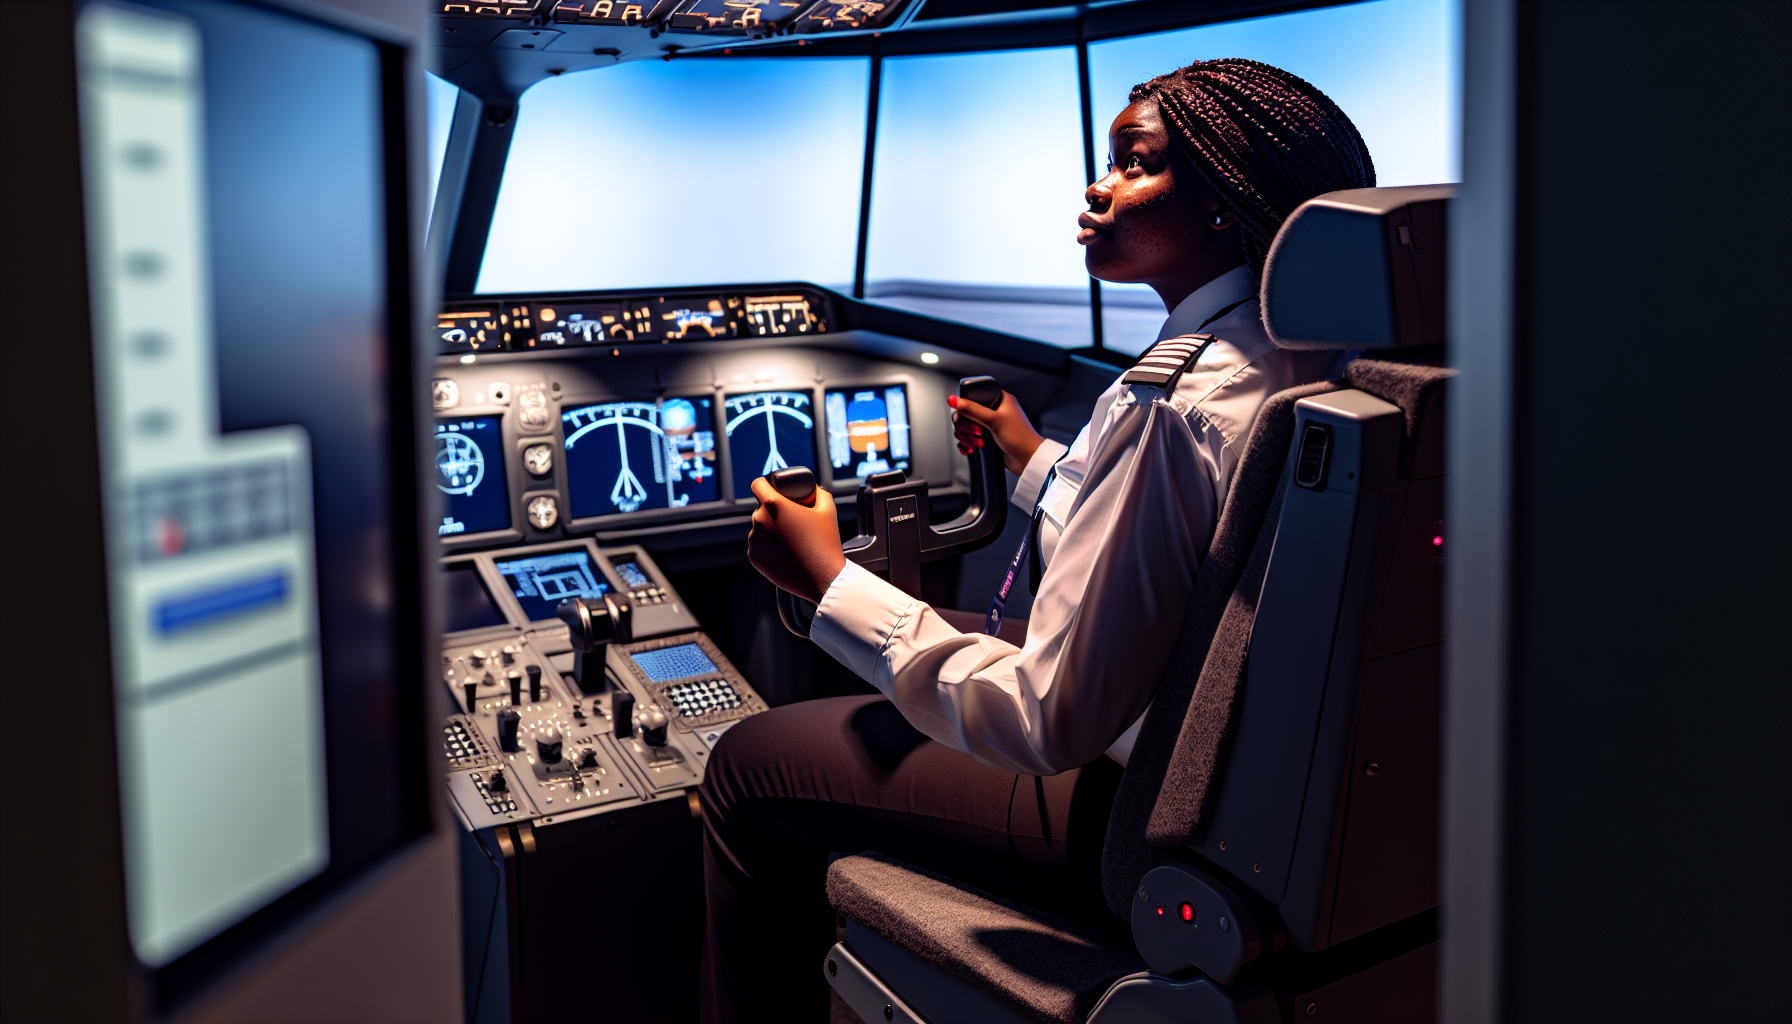 Flight simulator used for pilot training